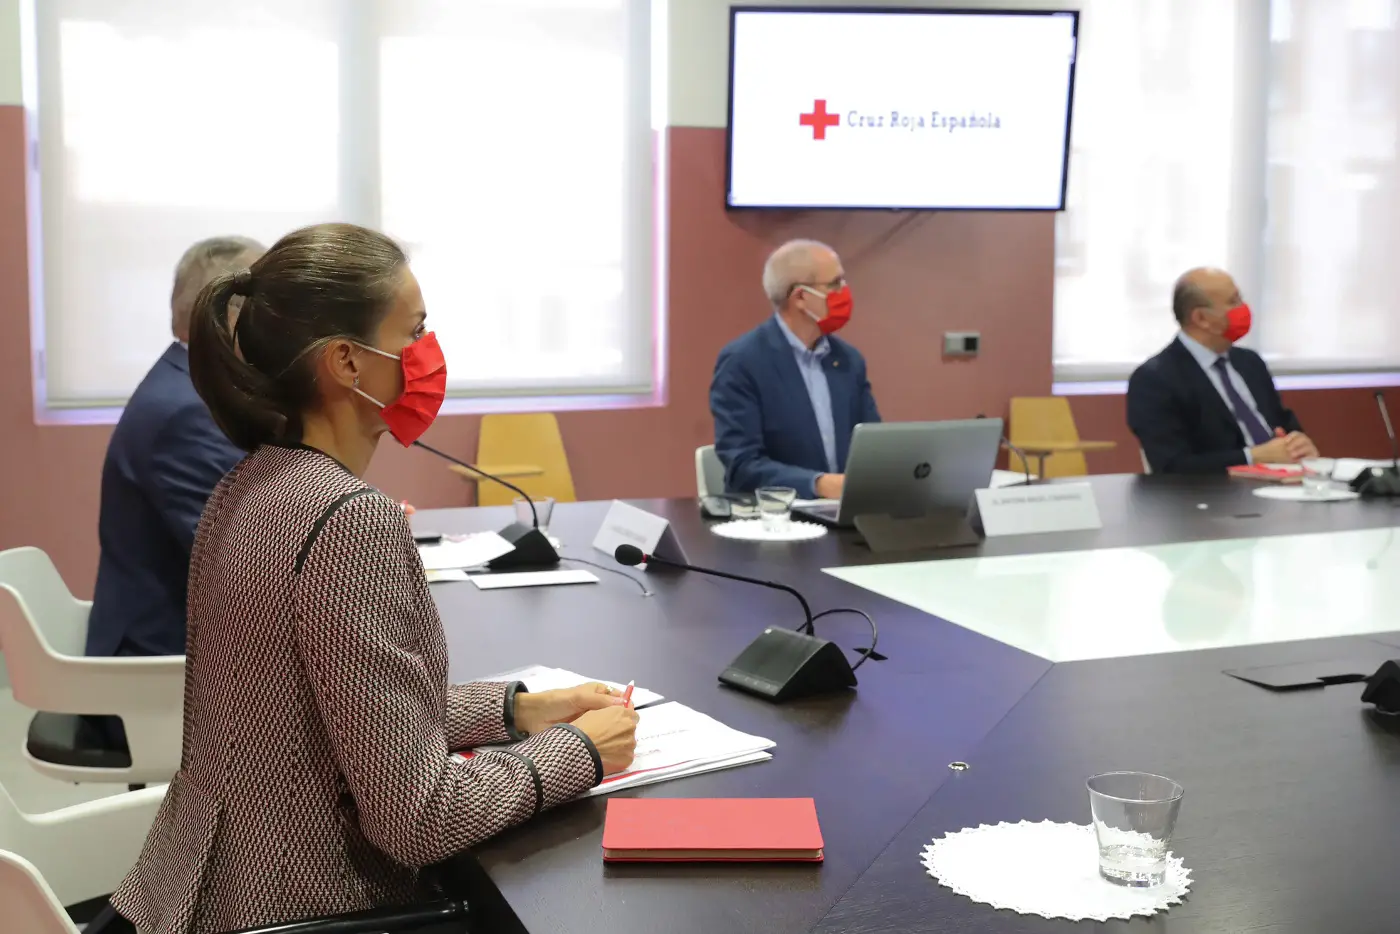 Queen Letizia of Spain in Boss blazer for Spanish Red Cross meeting